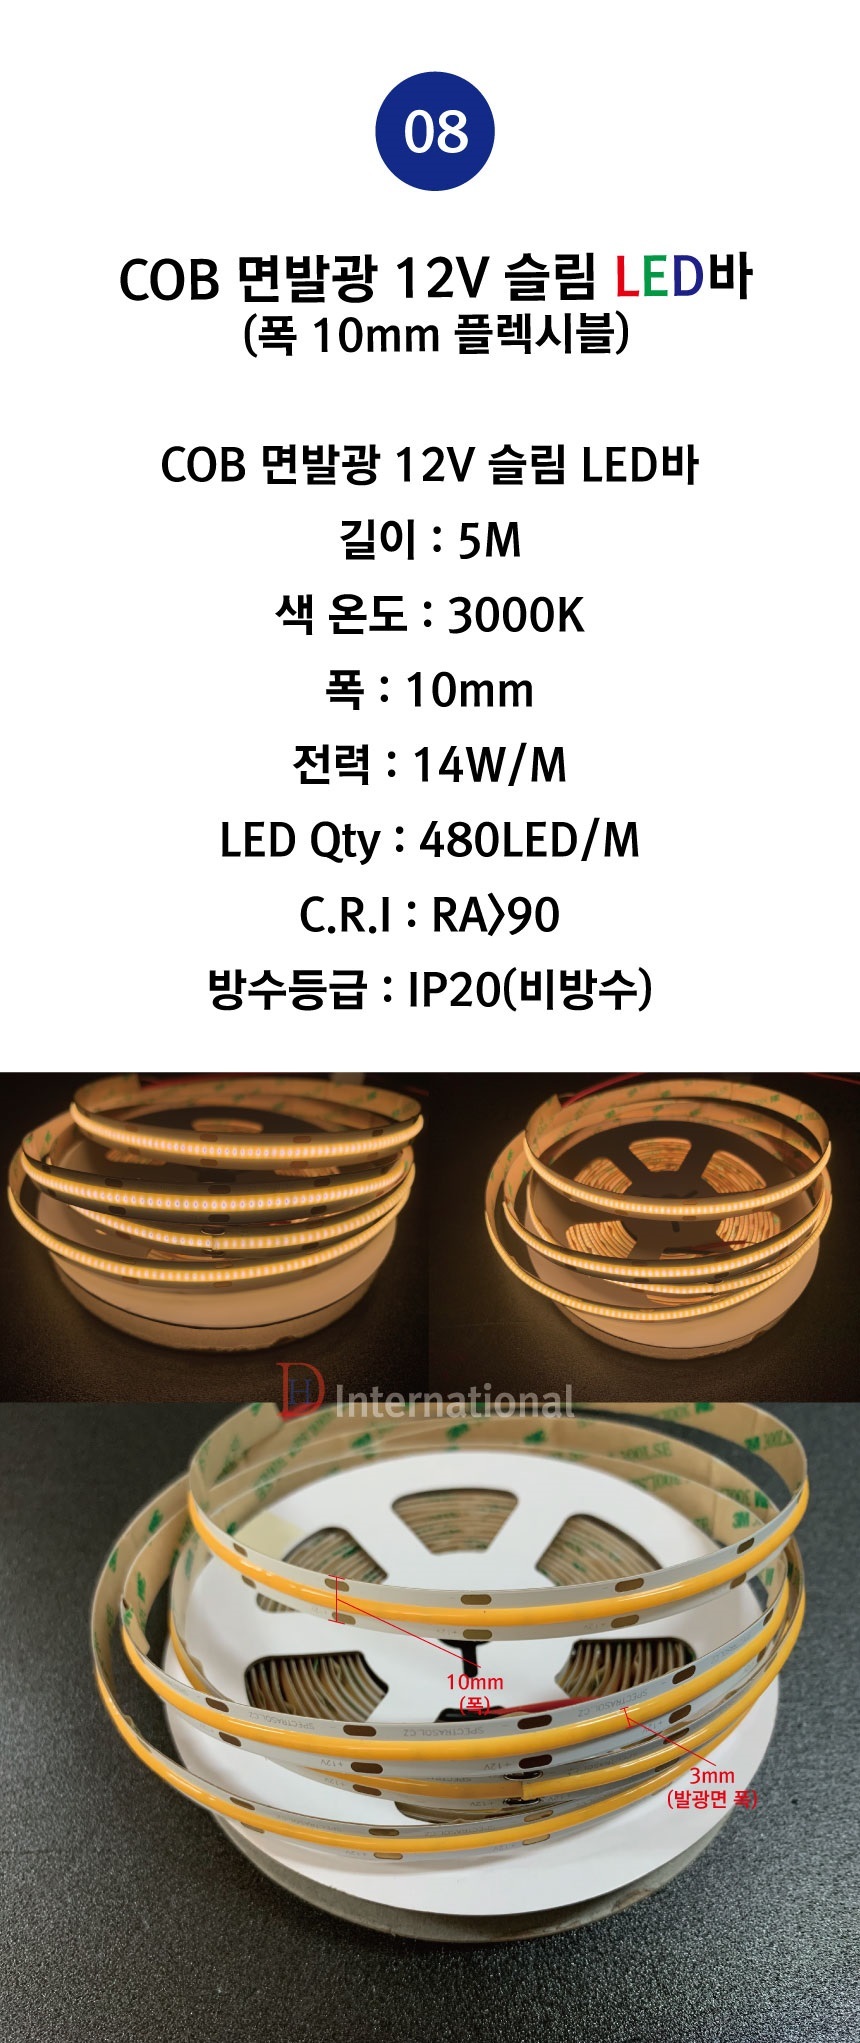 COB-LED-480LED-10mm-3000K-%EC%83%81%ED%9